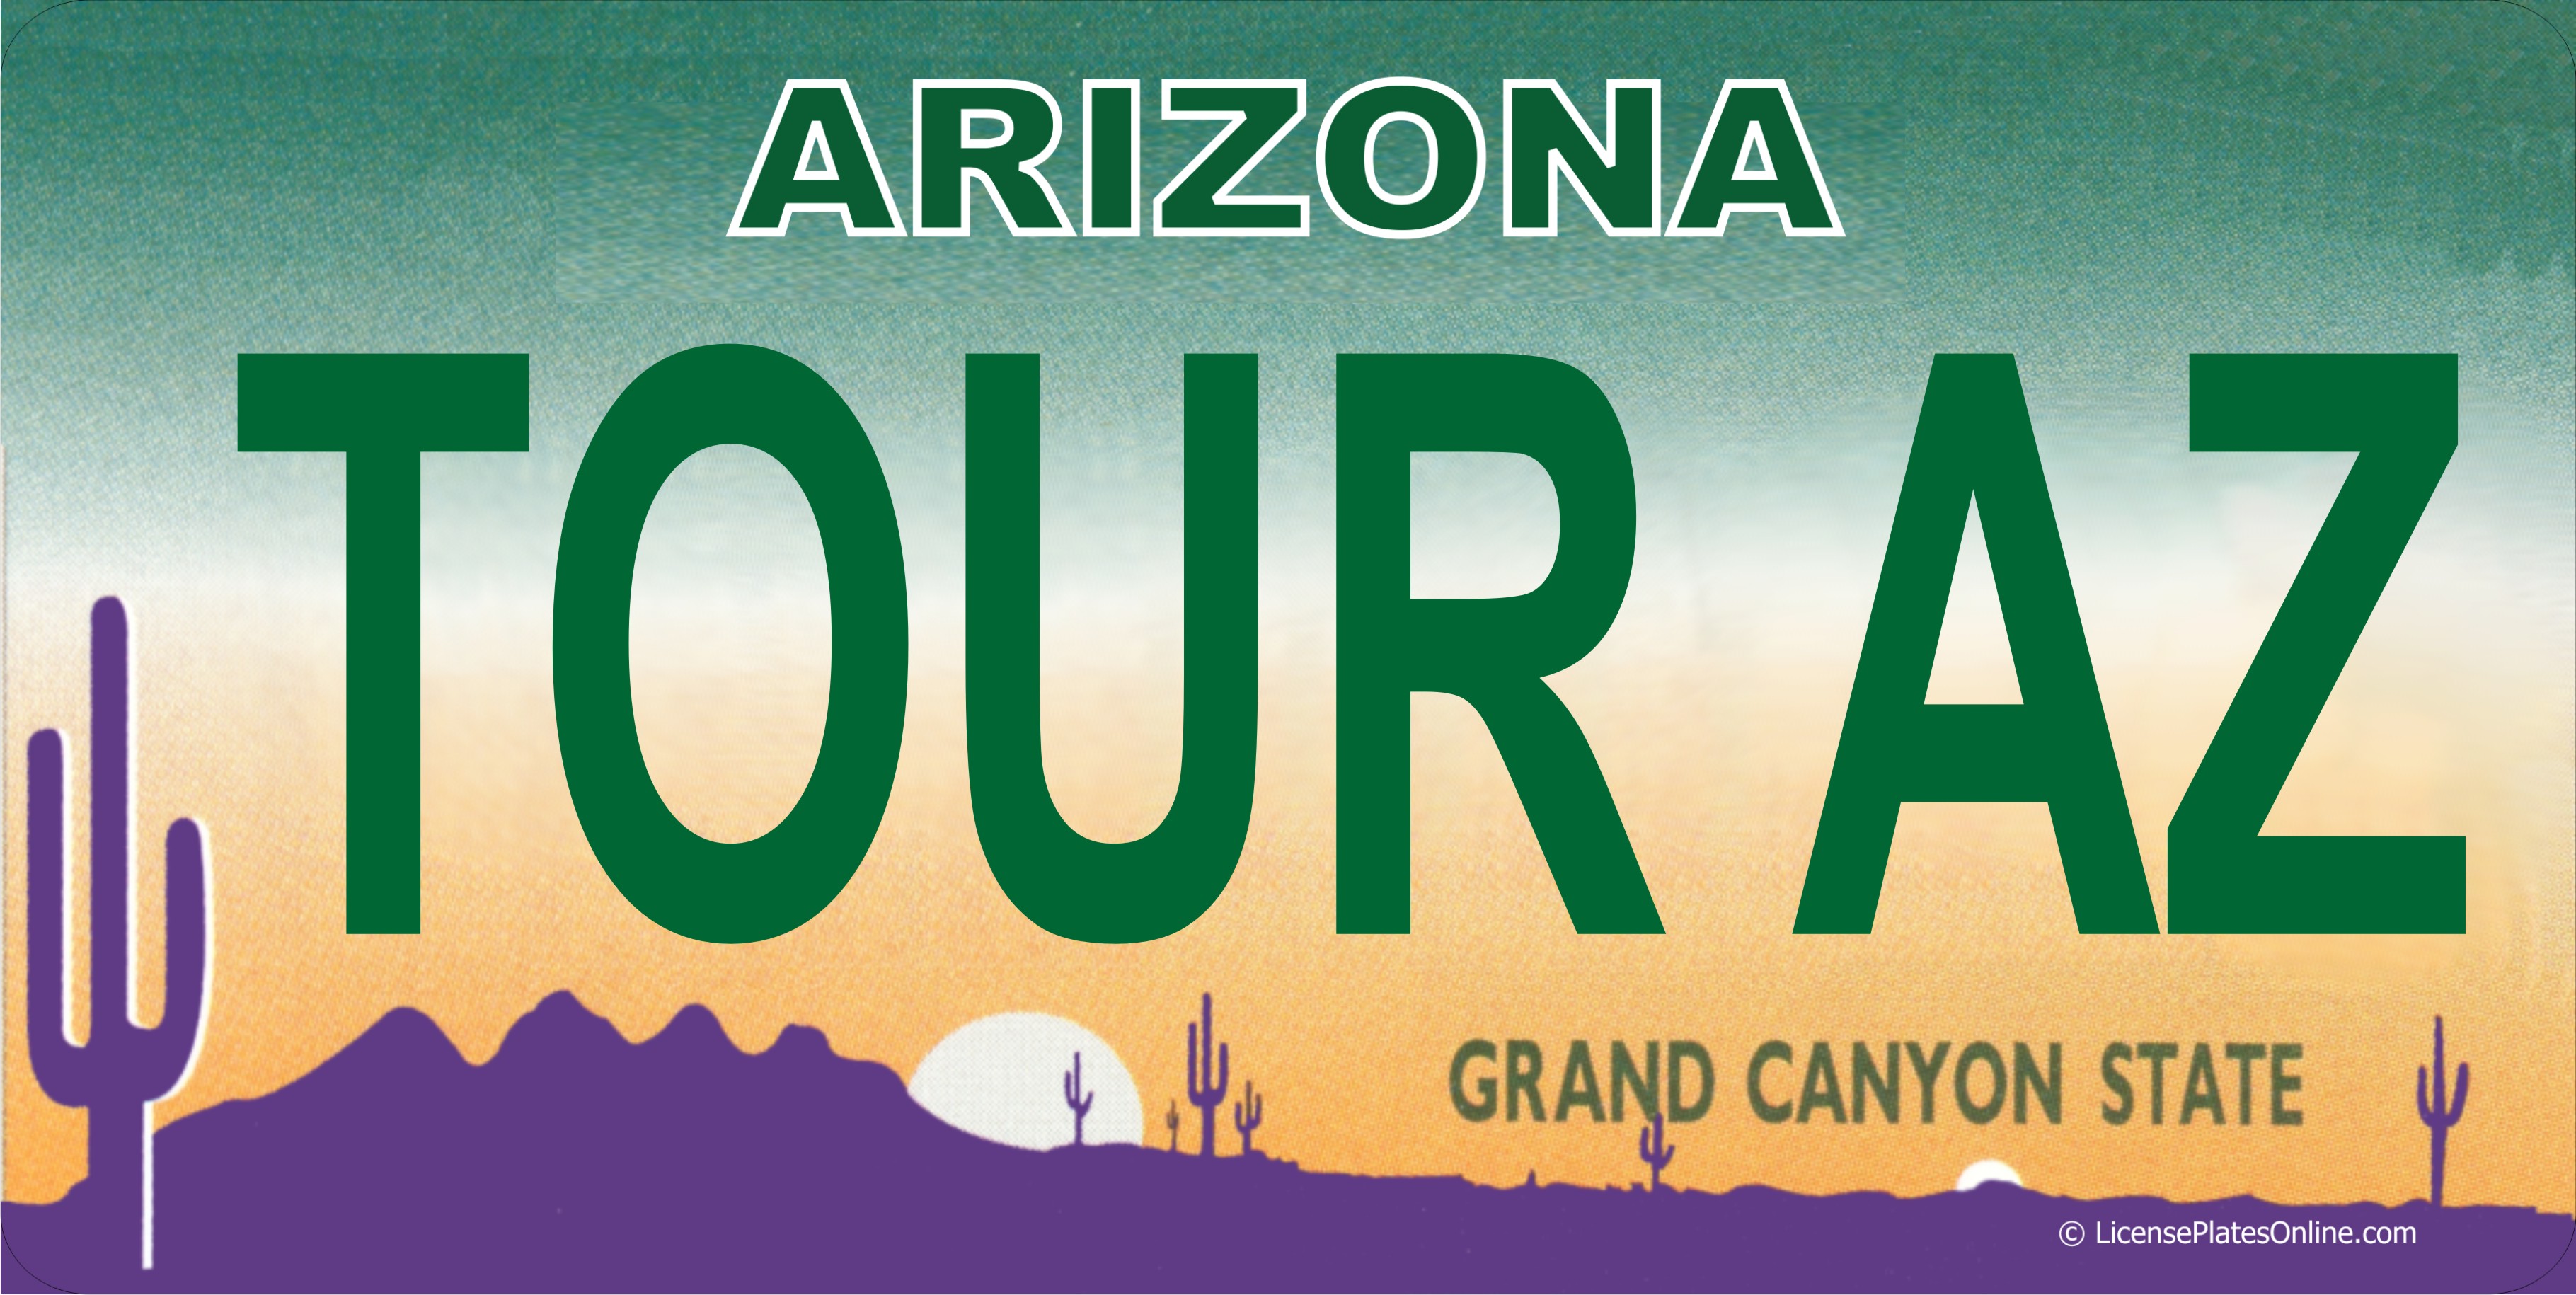 Arizona TOUR AZ Photo LICENSE PLATE   Free Personalization on this PLATE